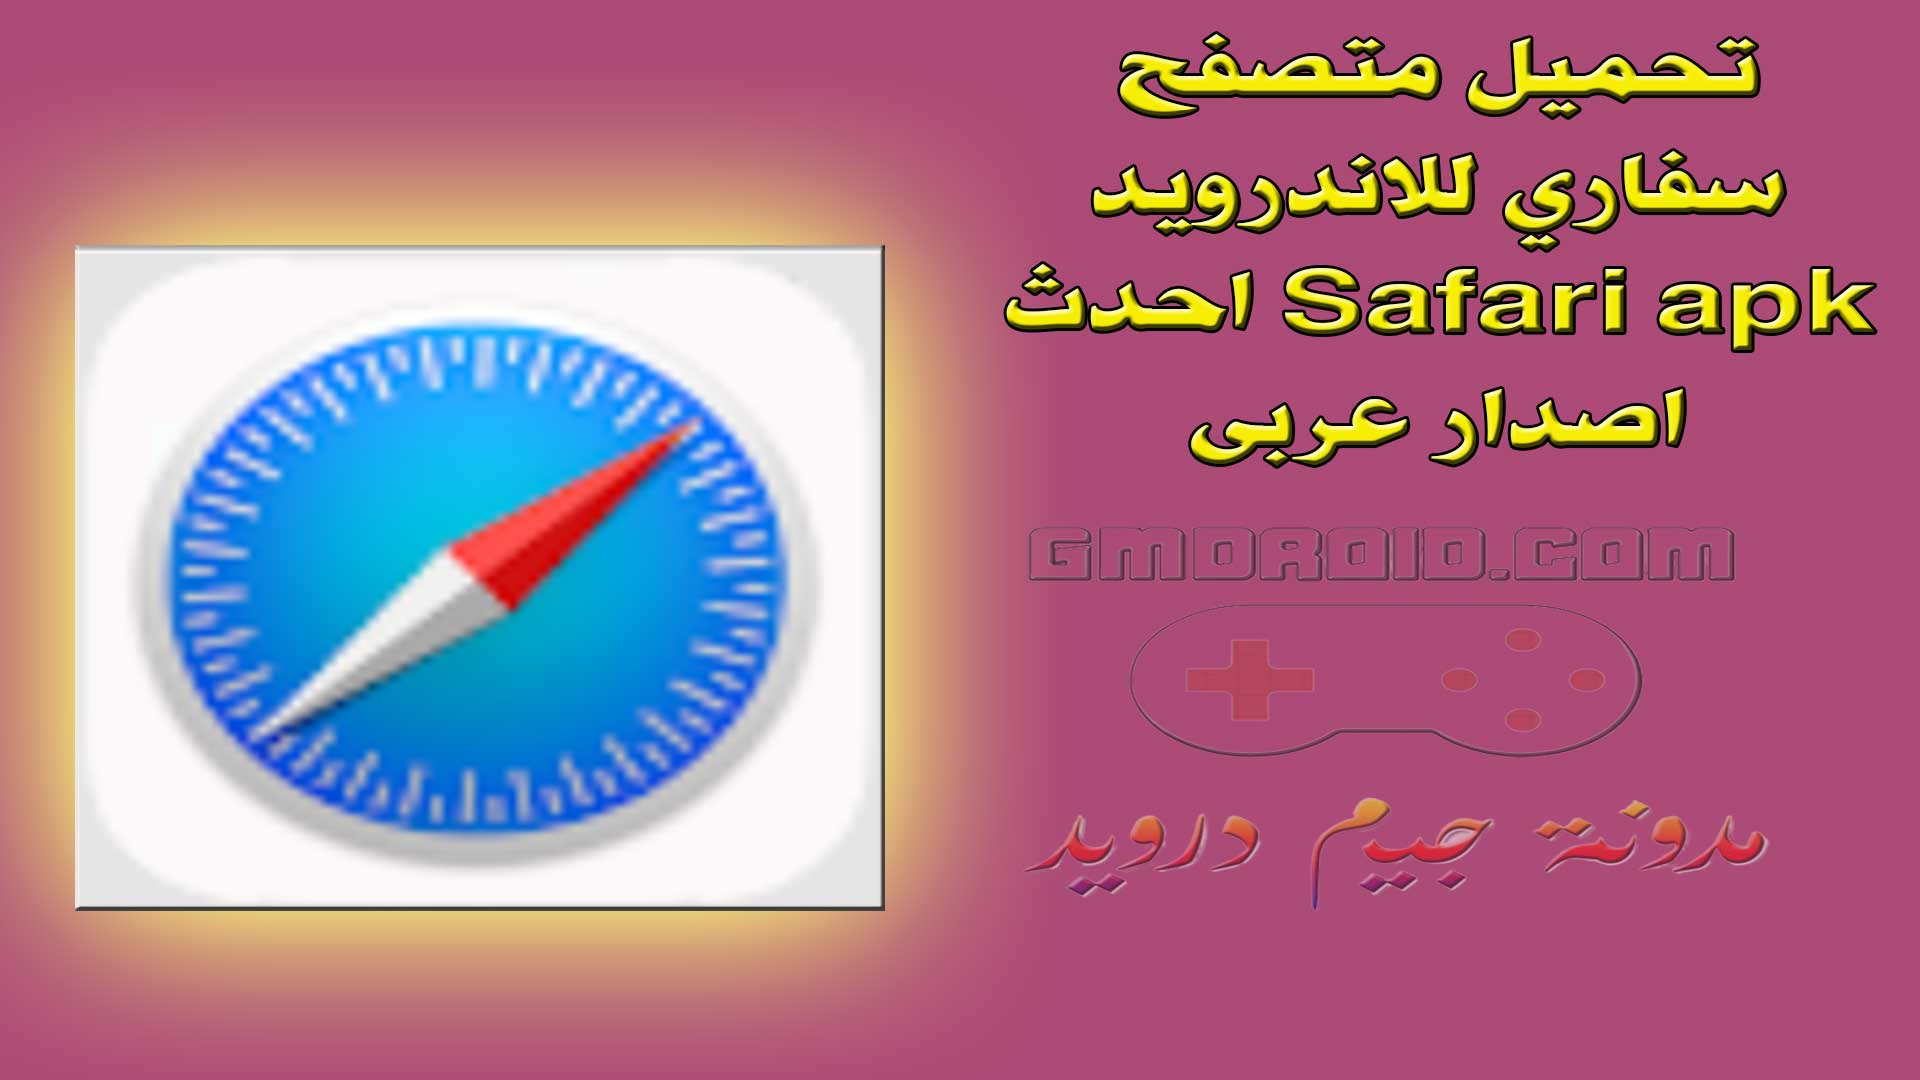 تحميل متصفح سفاري للاندرويد Safari apk احدث اصدار عربى